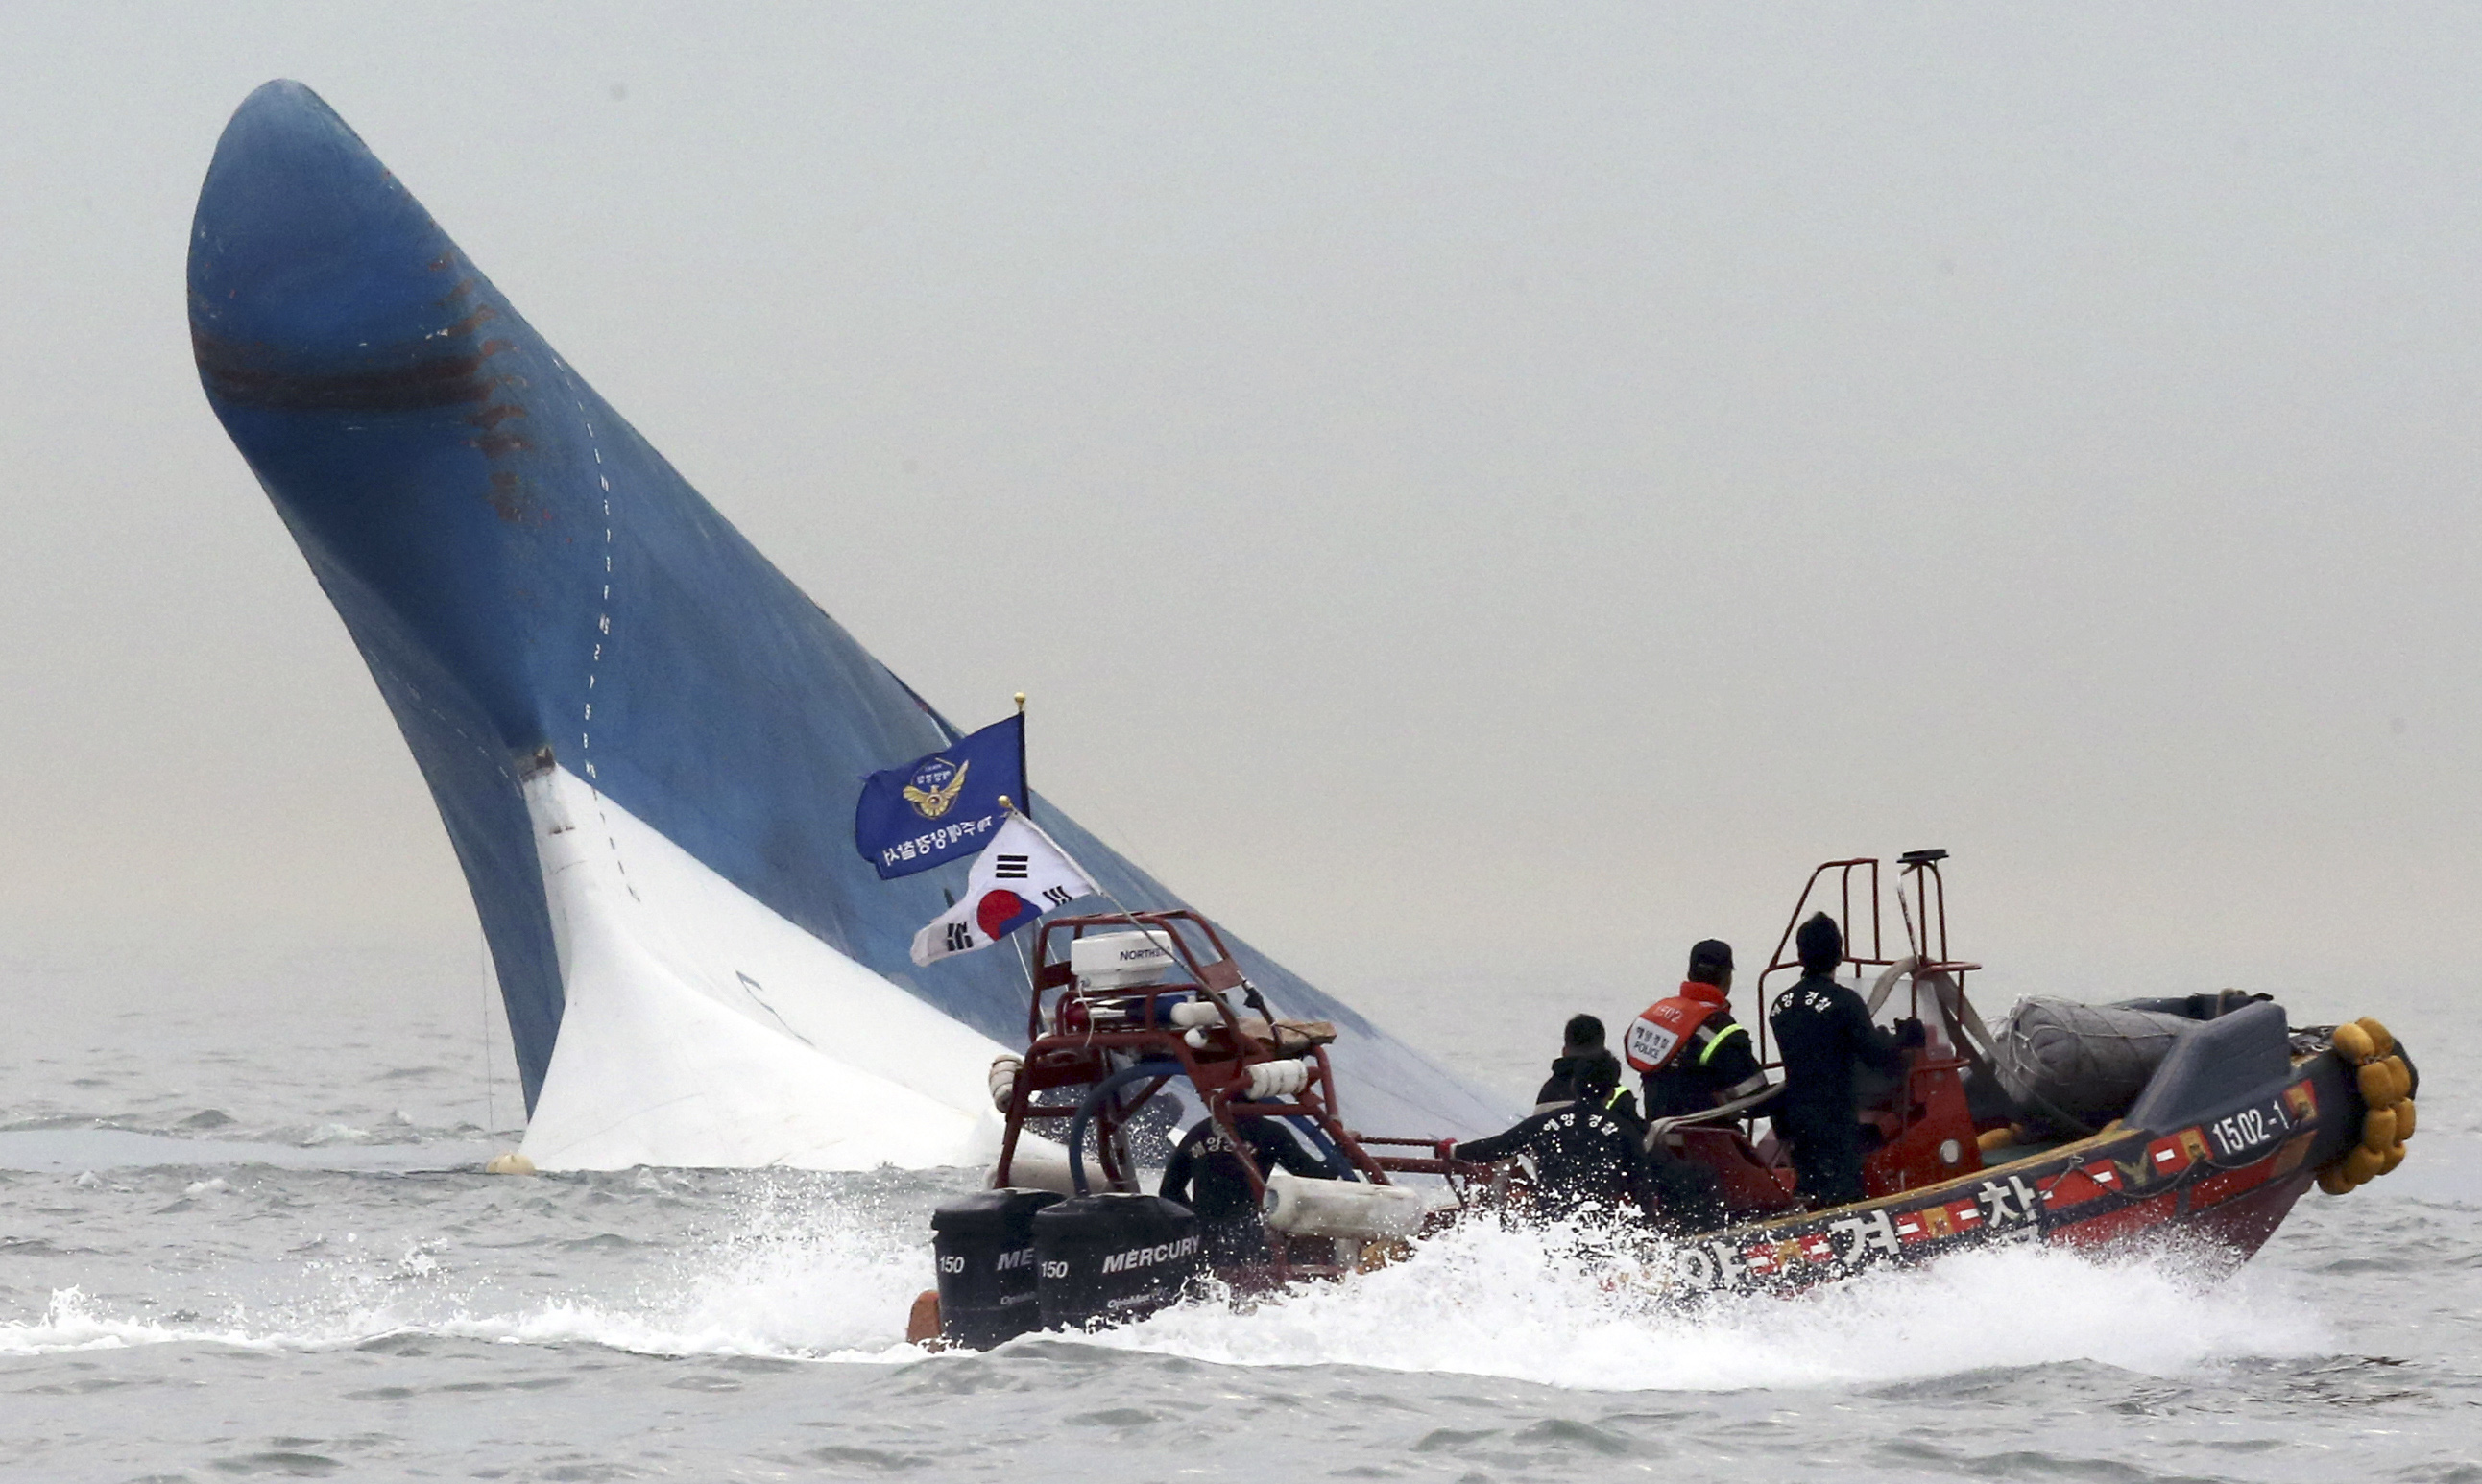 Ferrys Sudden Shift Trapped Passengers Inside, Survivors photo